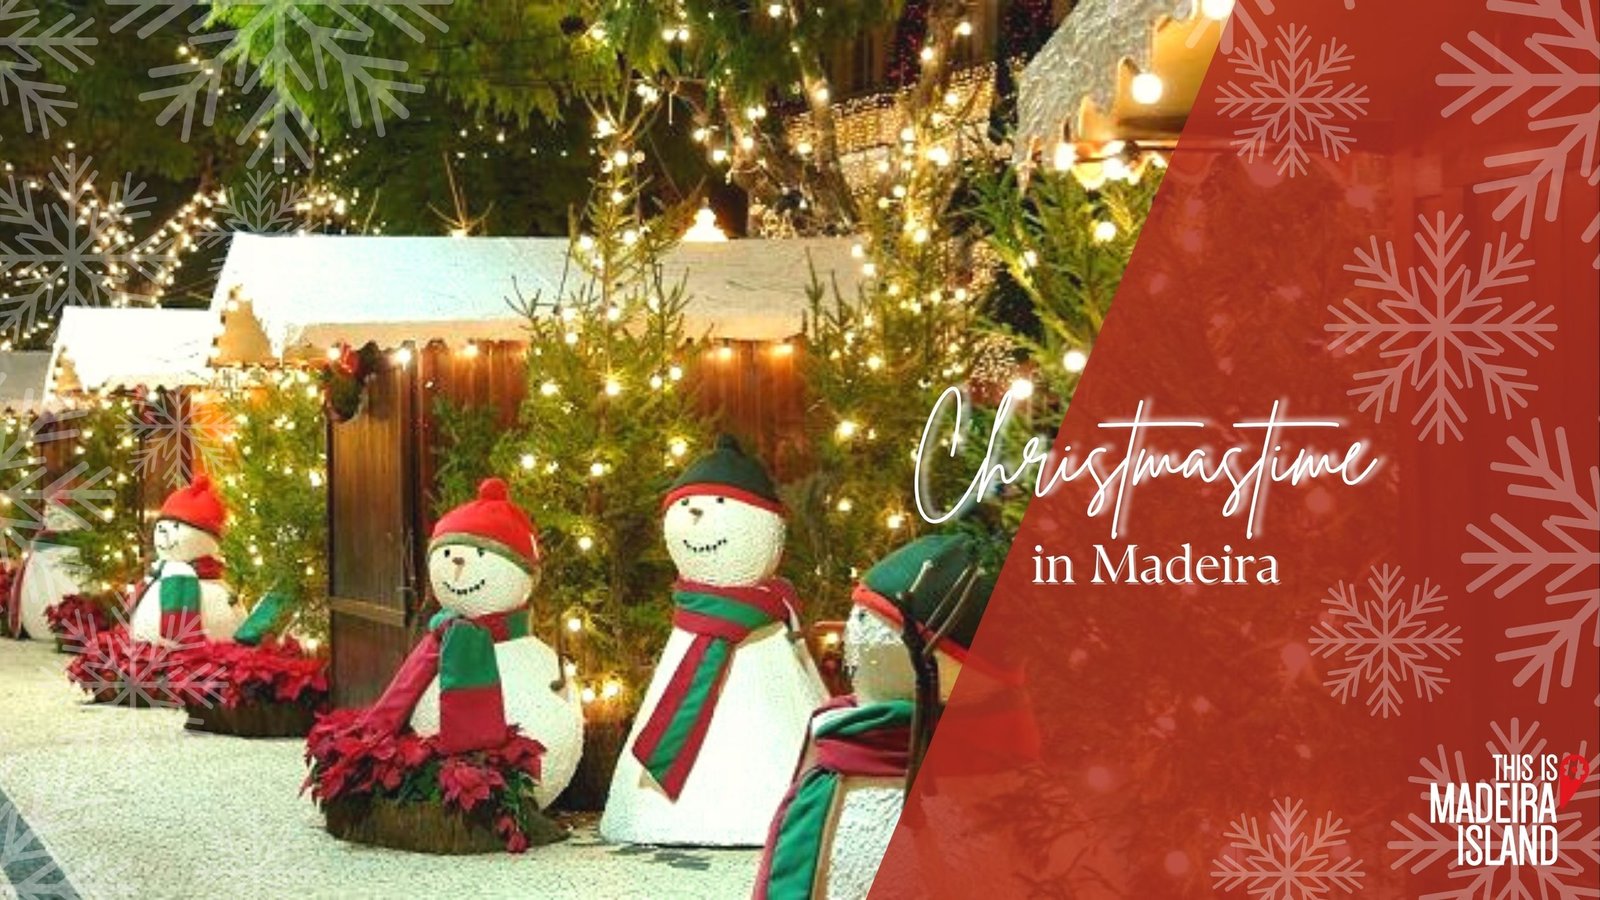 A Festa – Christmastime in Madeira